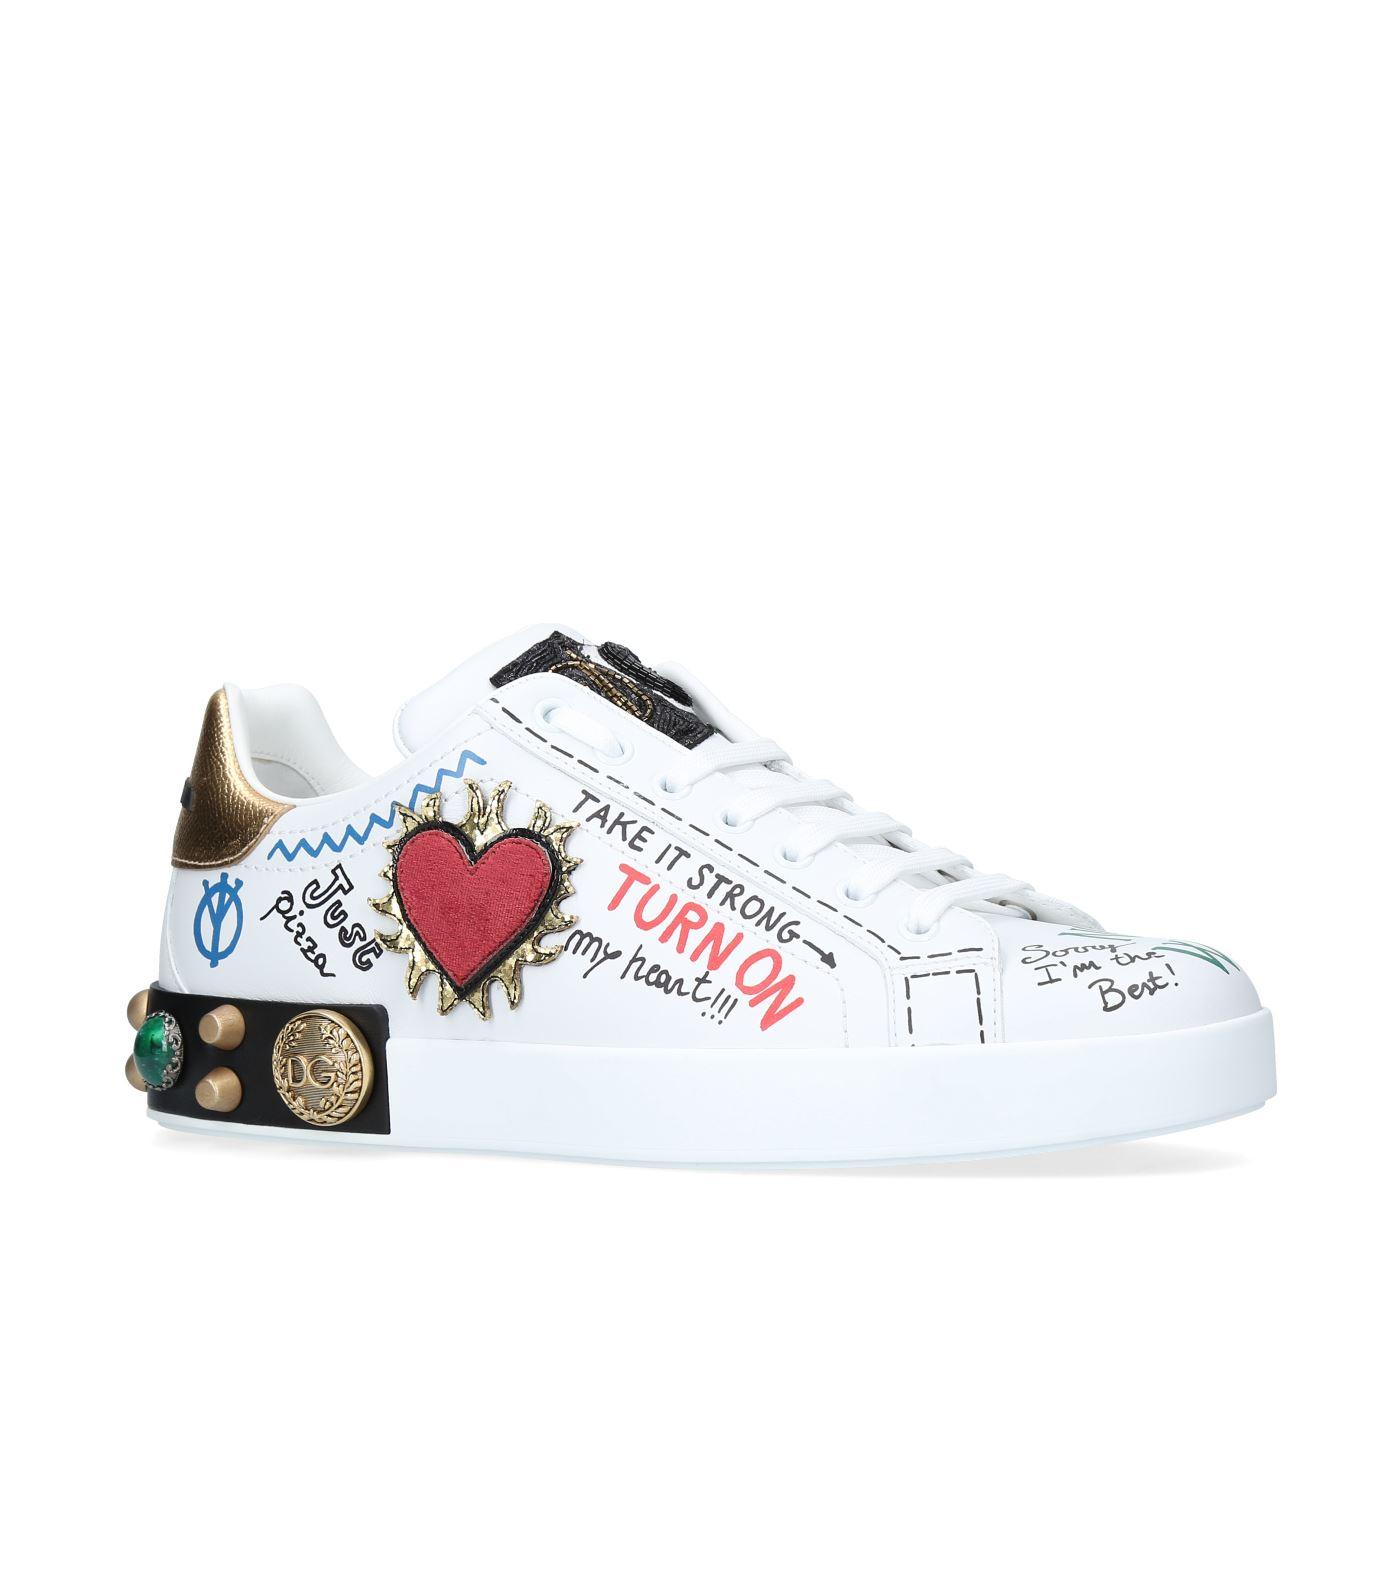 Dolce & Gabbana Rubber Portofino Embellished Tennis Sneaker in White ...